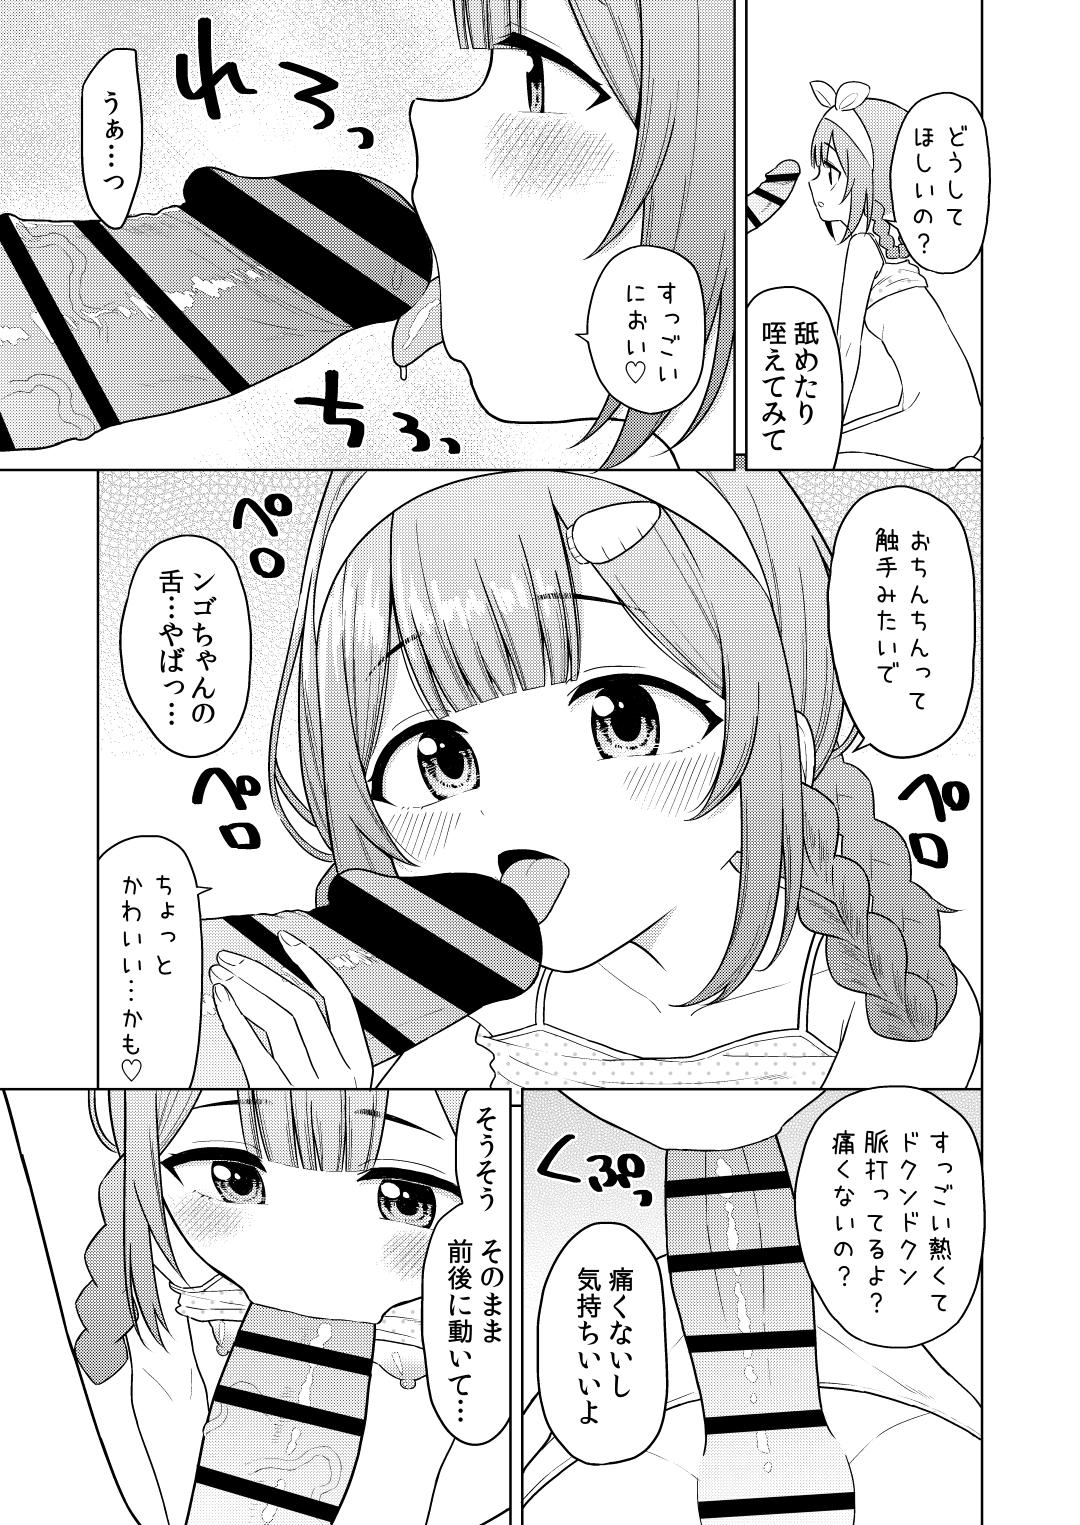 Licking Ippai Shaberu Kimi ga Suki - I love you who talk a lot. - Nijisanji Story - Page 12